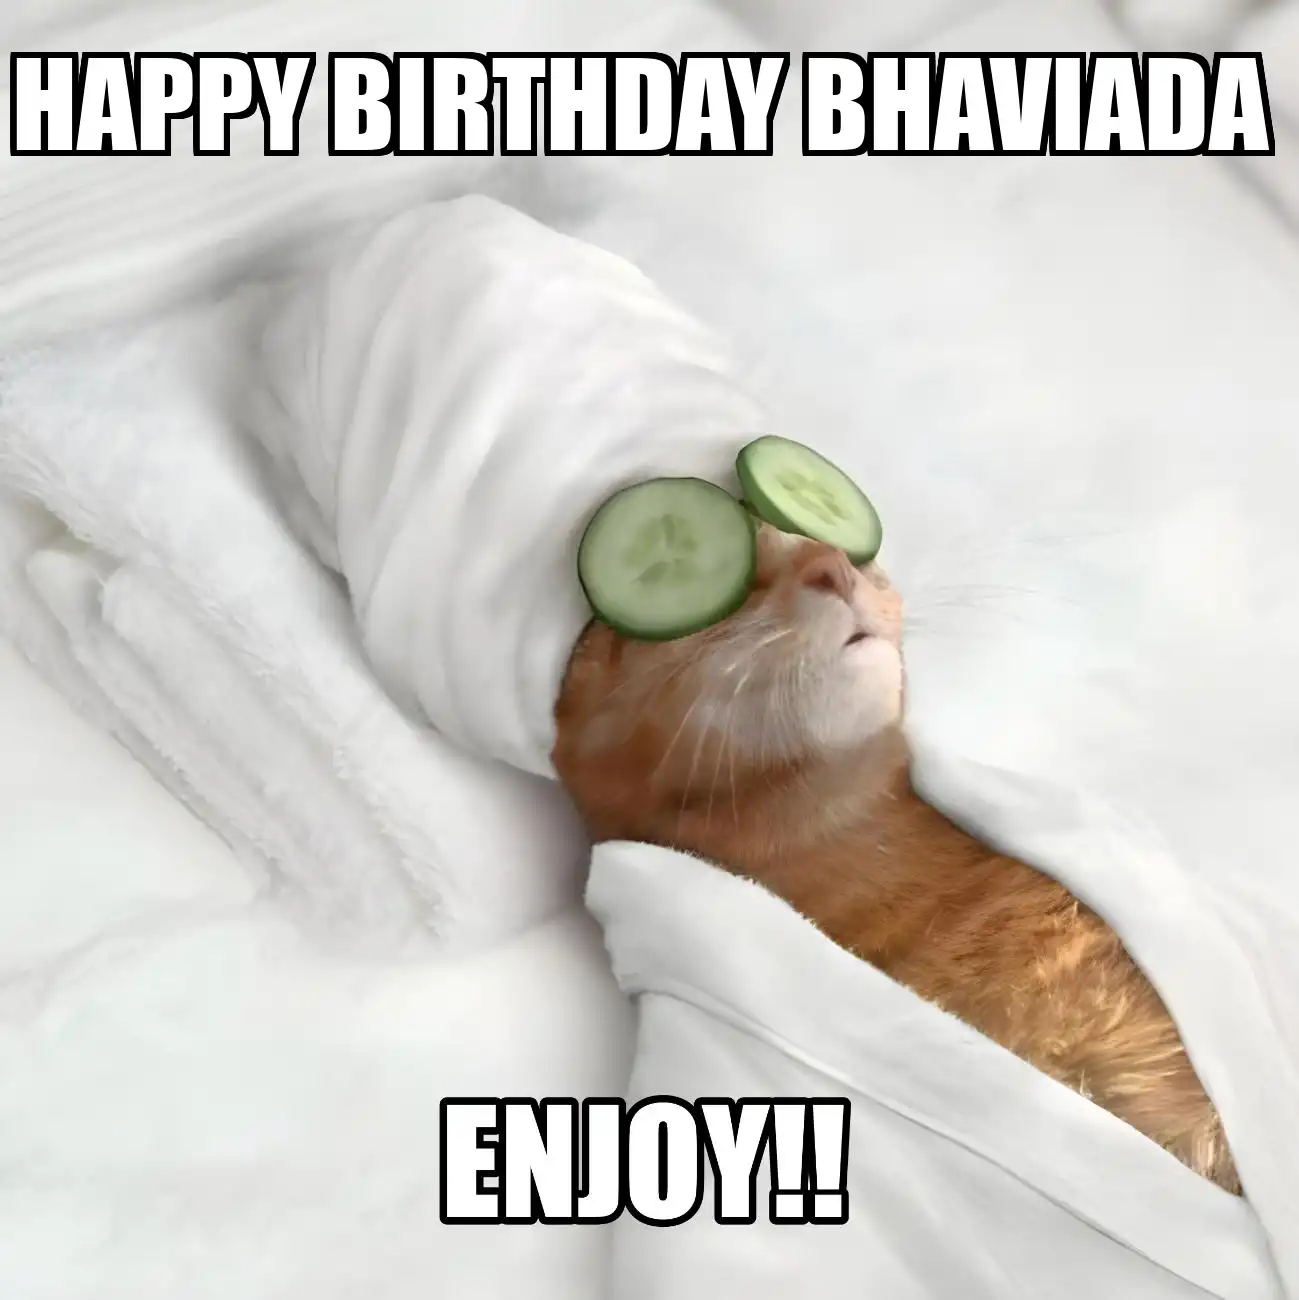 Happy Birthday Bhaviada Enjoy Cat Meme